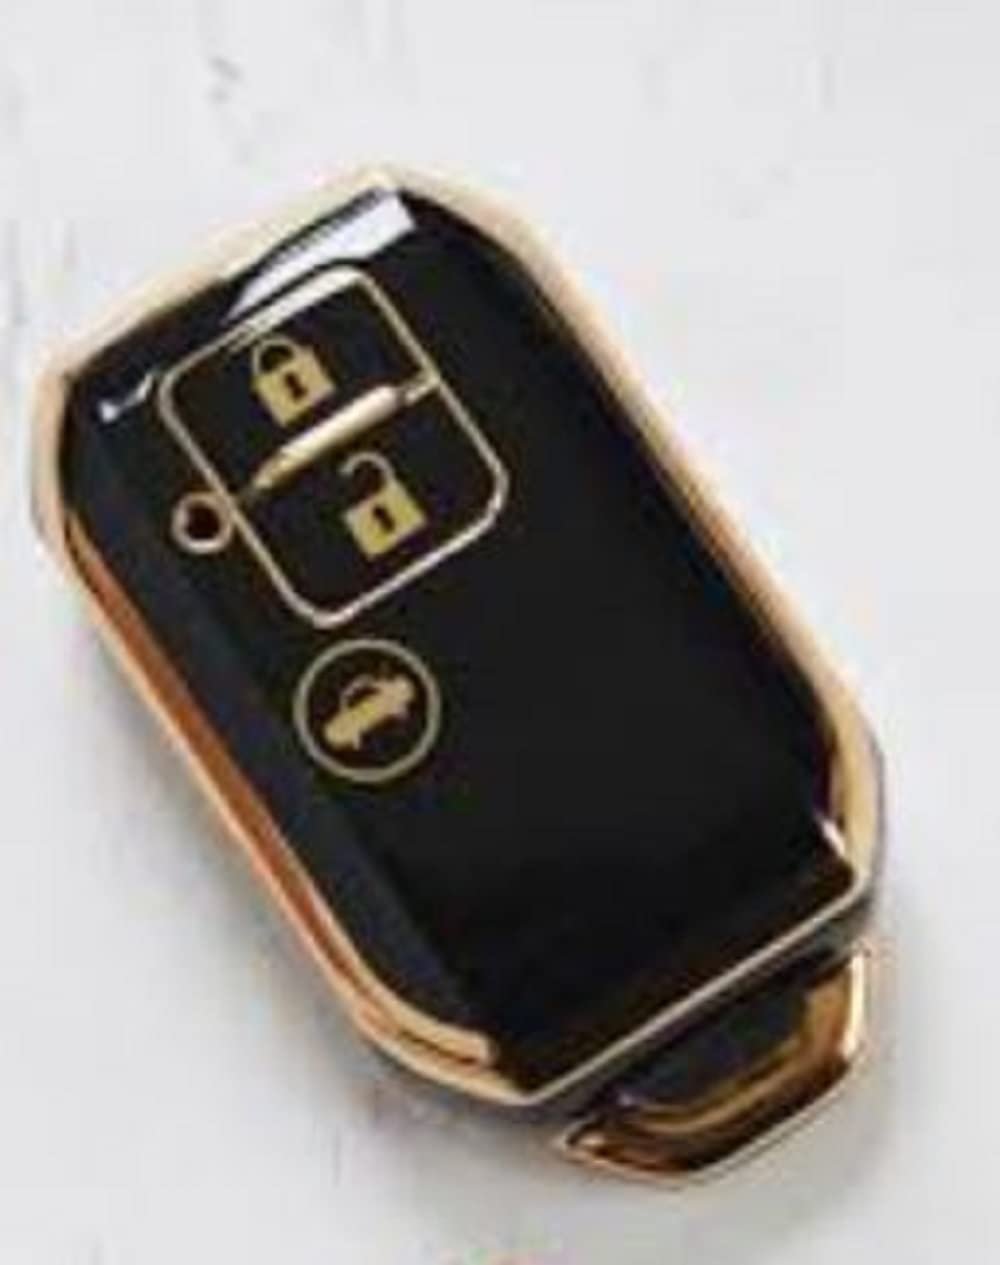 TPU Key Cover Compatible DZire, Swift, Ertiga 3 Button Smart Key (Push Button Start Models only) (Black) Image 